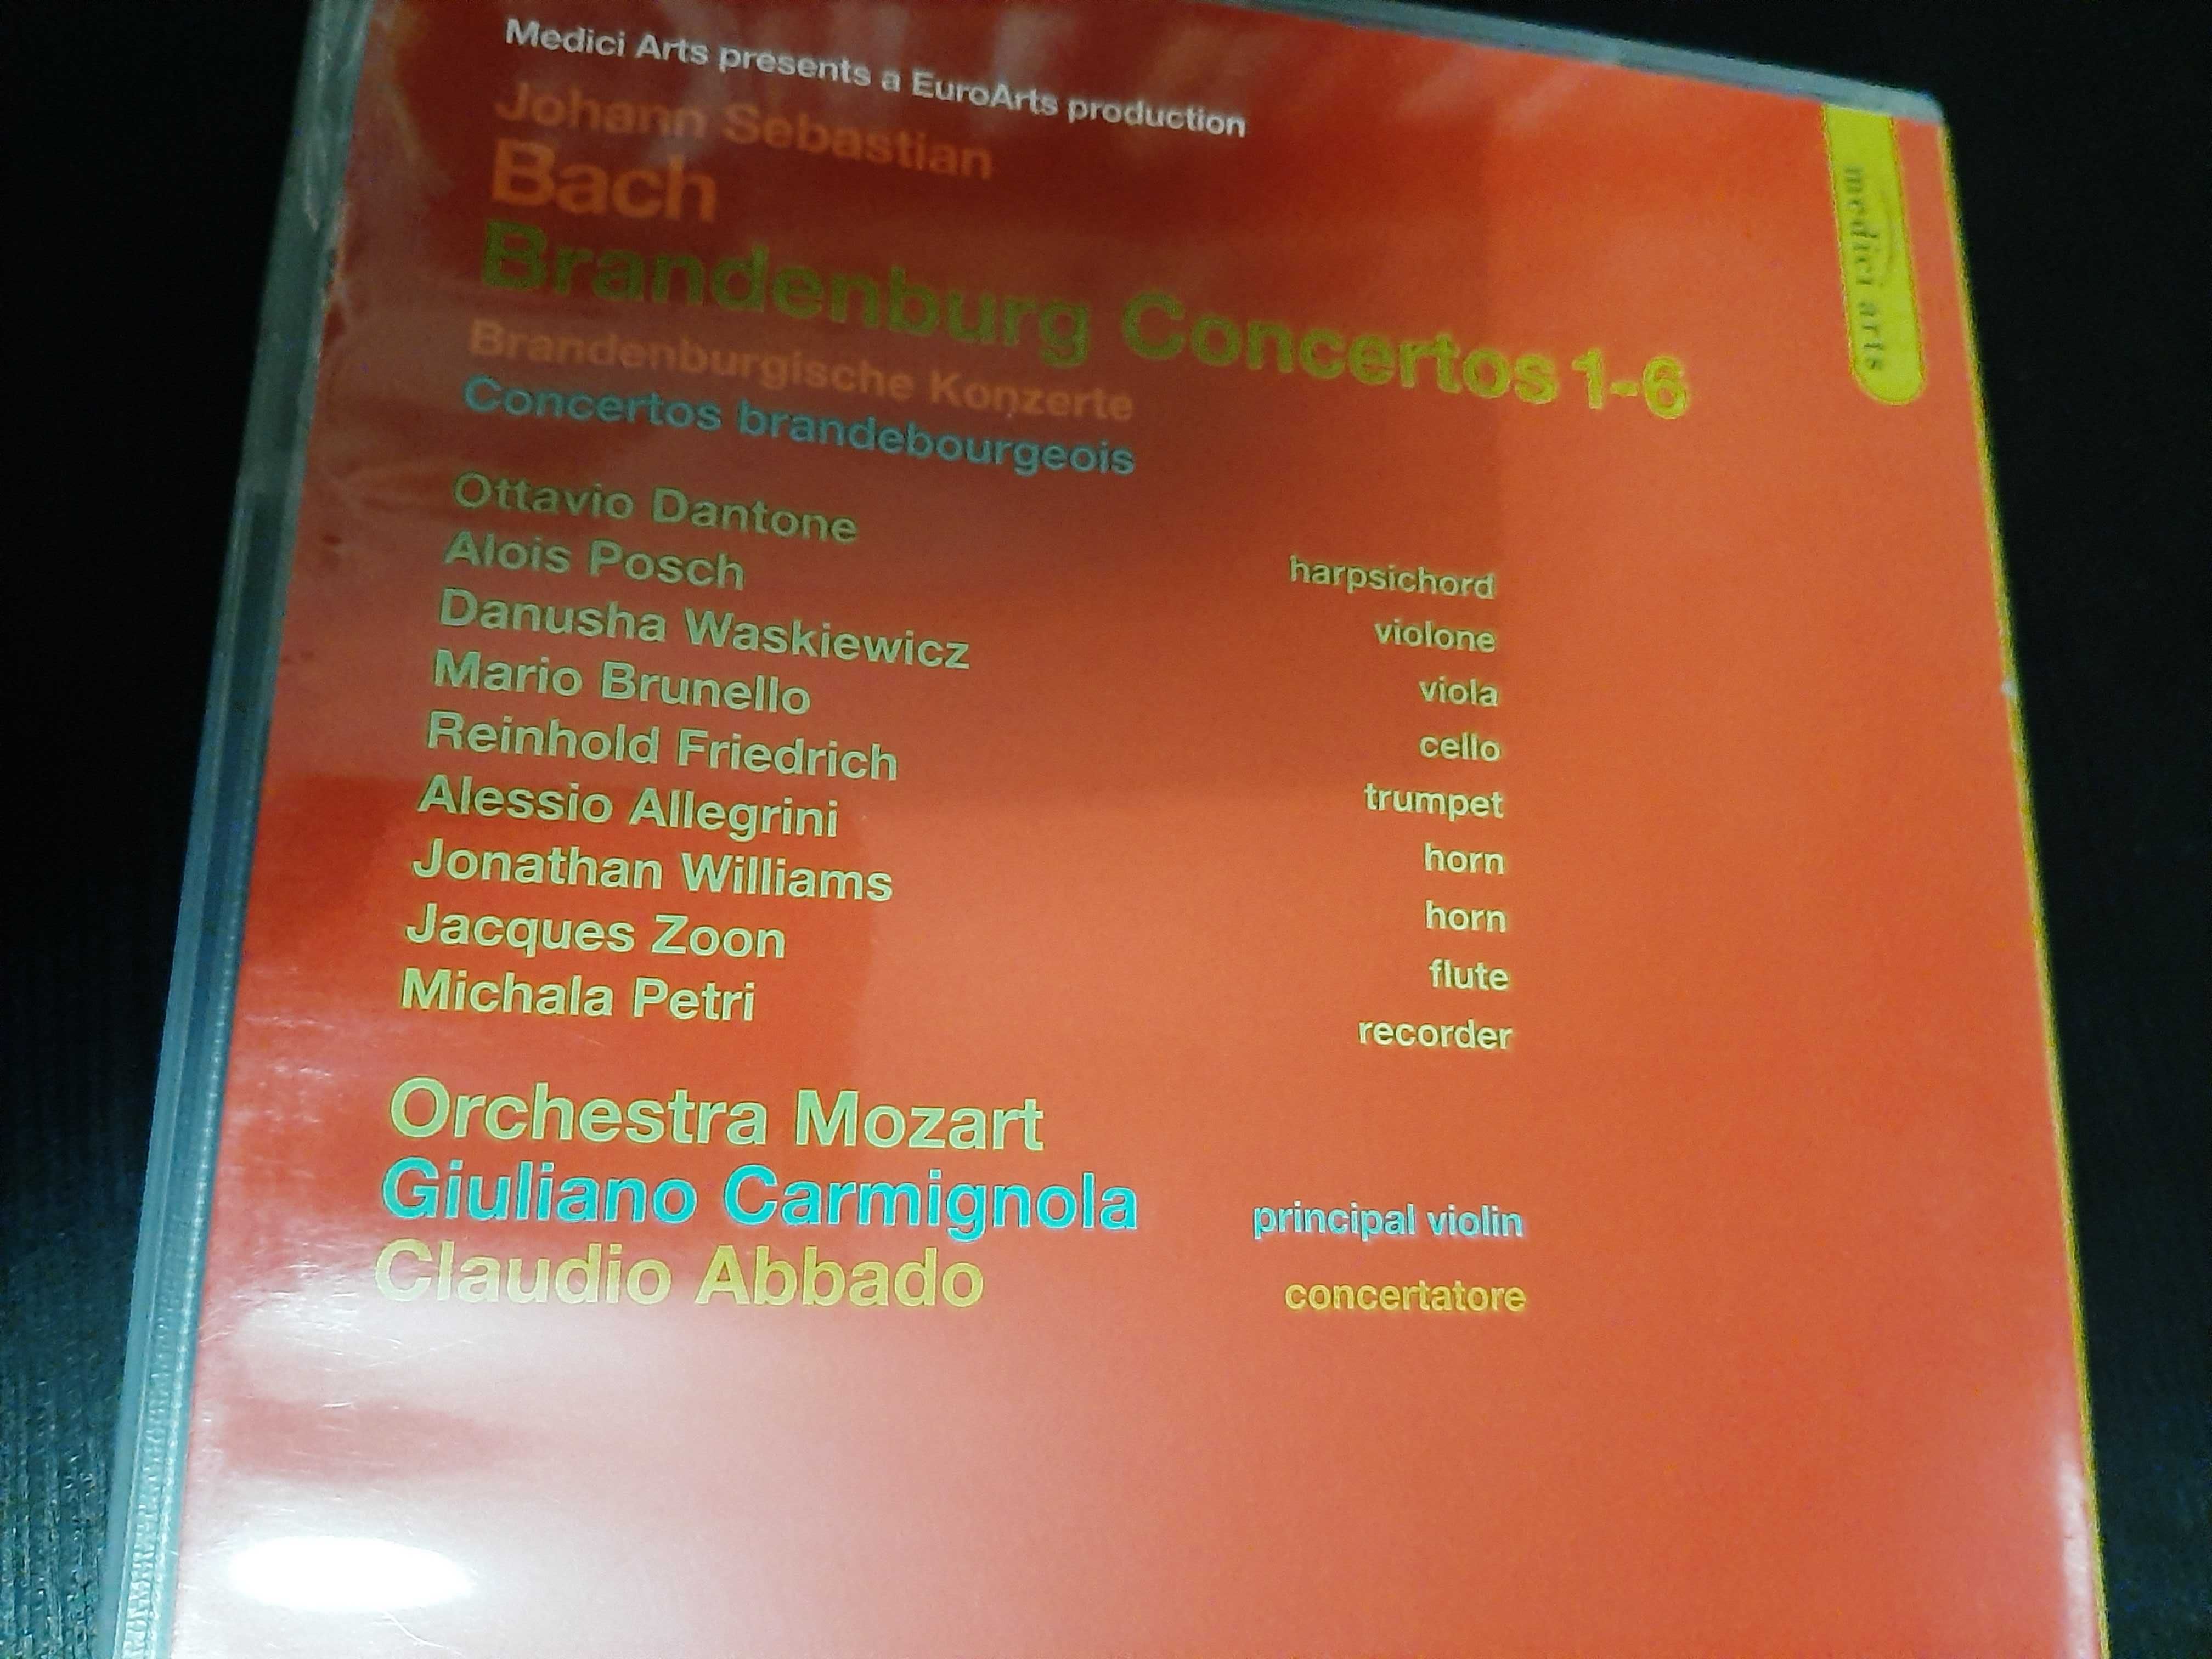 Bach –  Brandenburg Concertos 1-6  –  Orchestra Mozart, Claudio Abbado